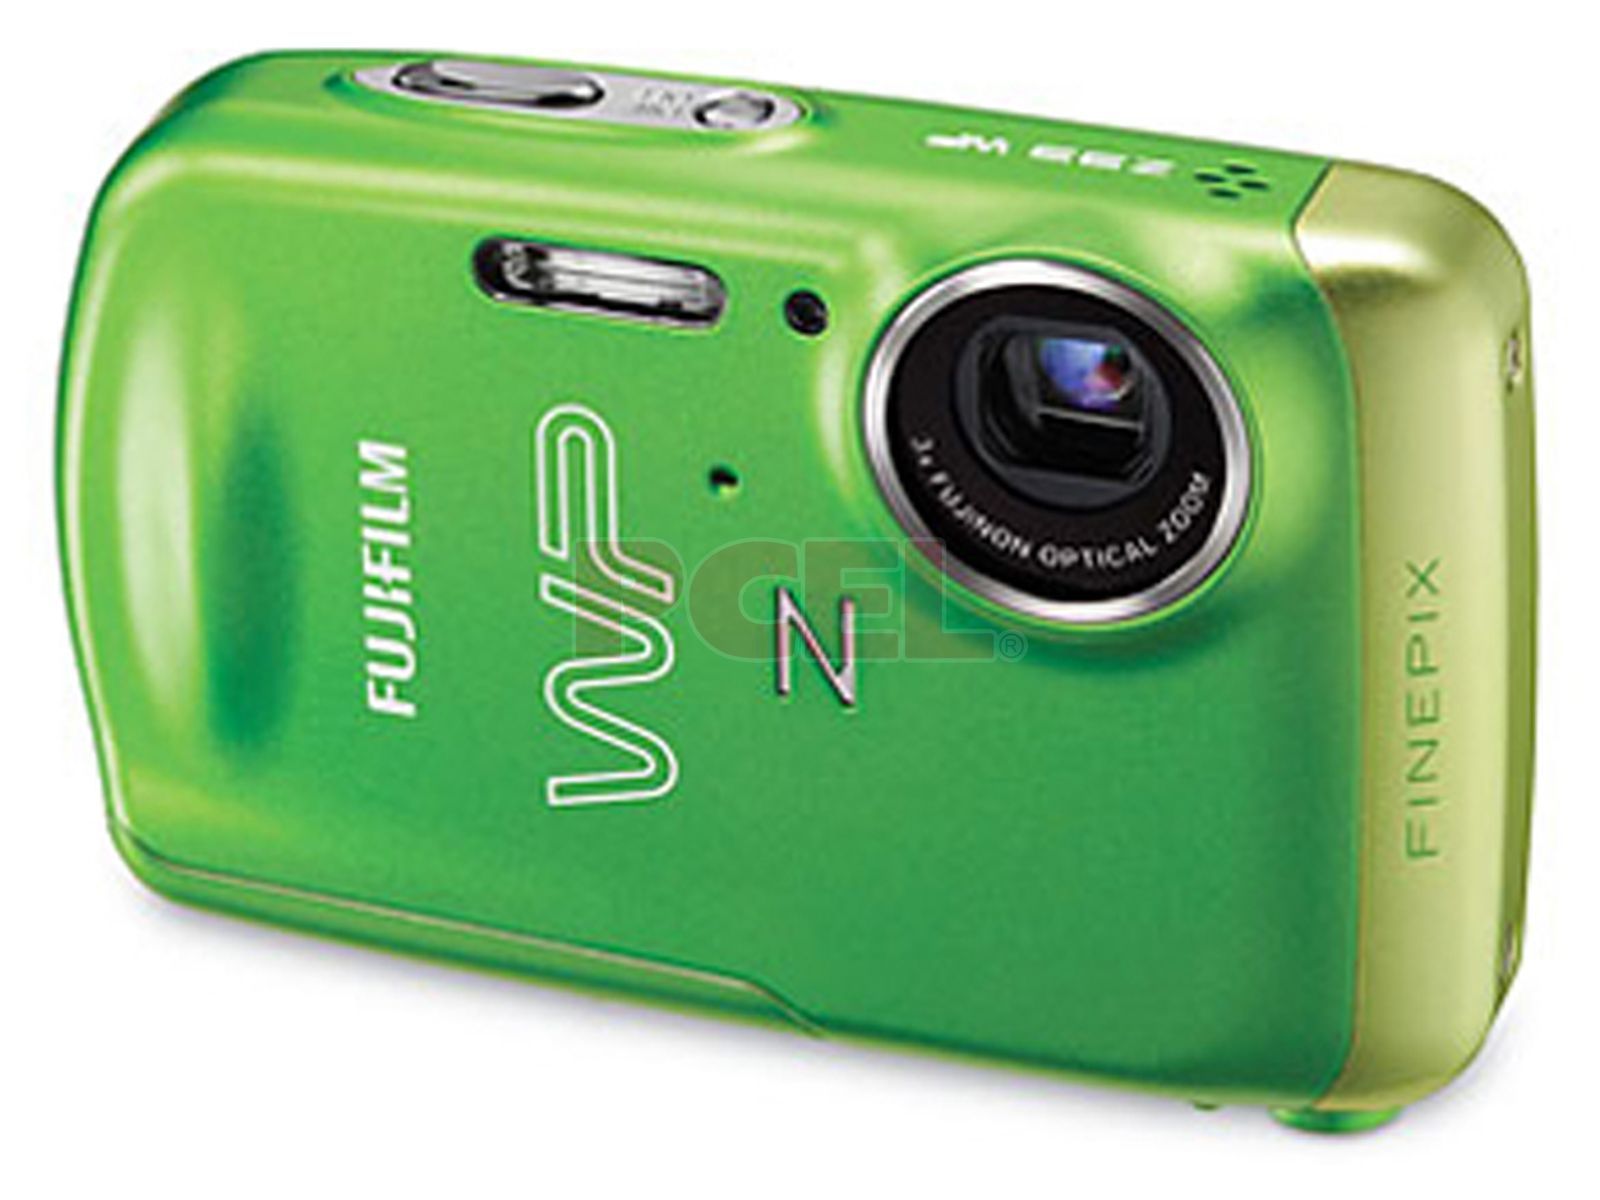 Cámara Fotográfica Digital Fujifilm FinePix Z33 Waterproof hasta 3m bajo Agua, 10MP. Color Verde